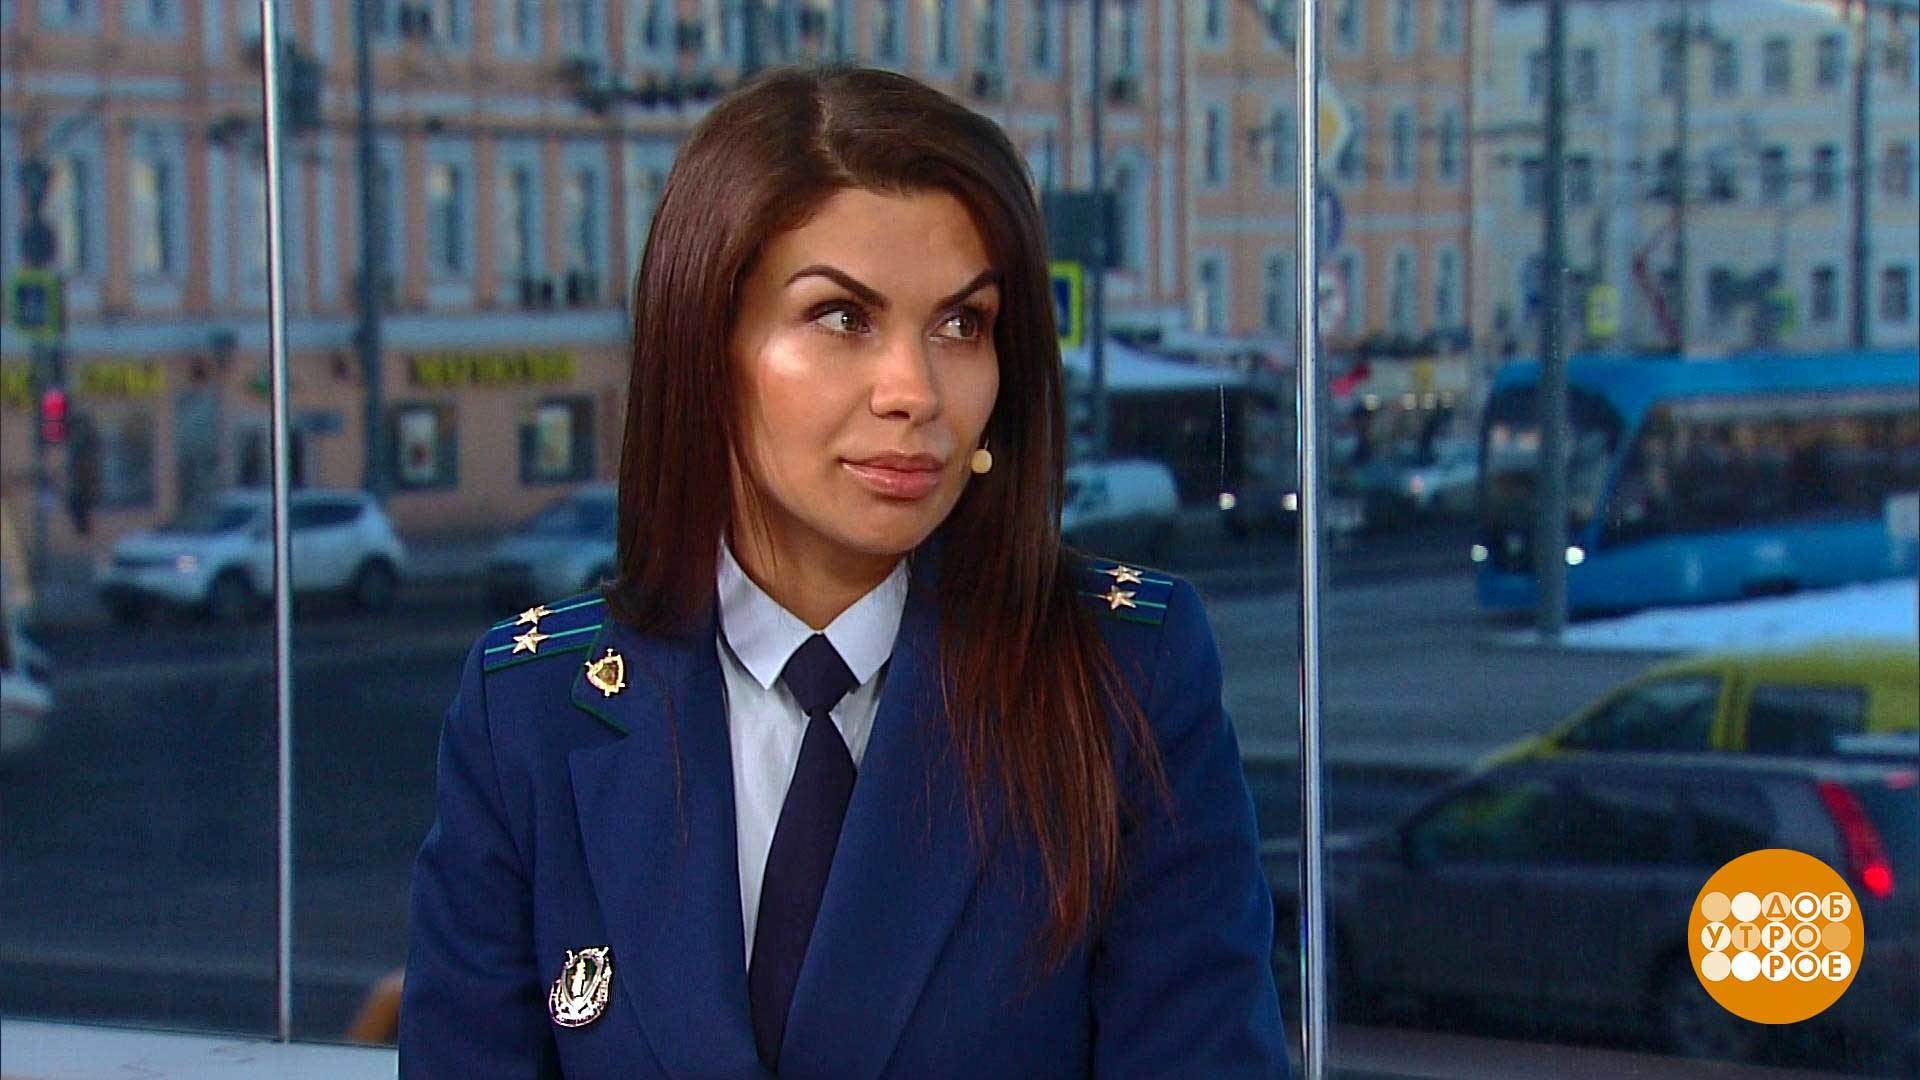 Людмила Нефедова